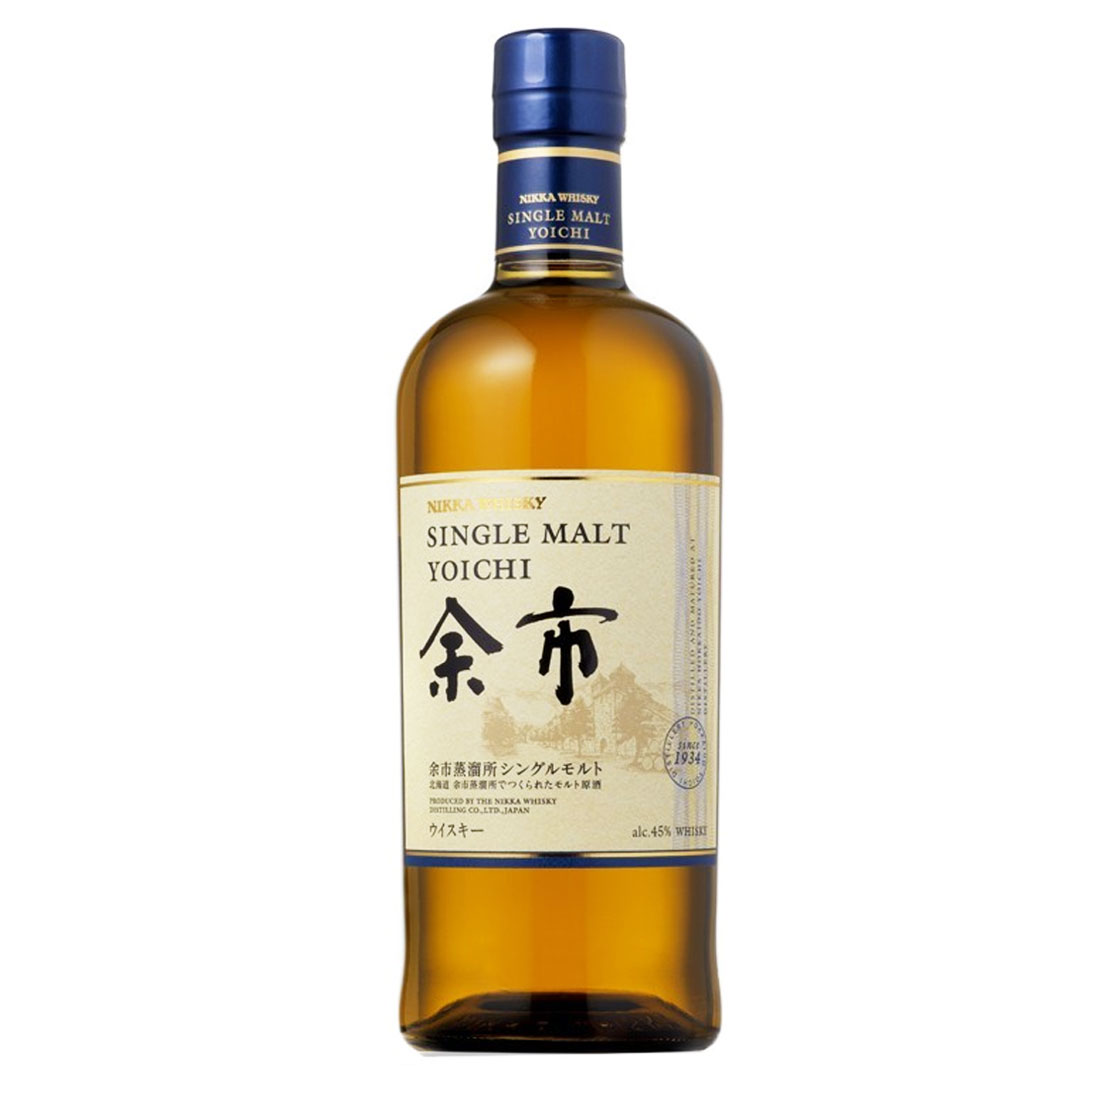 LB_Bottle-Nikka-Whisky-Single-Malt-Yoichi